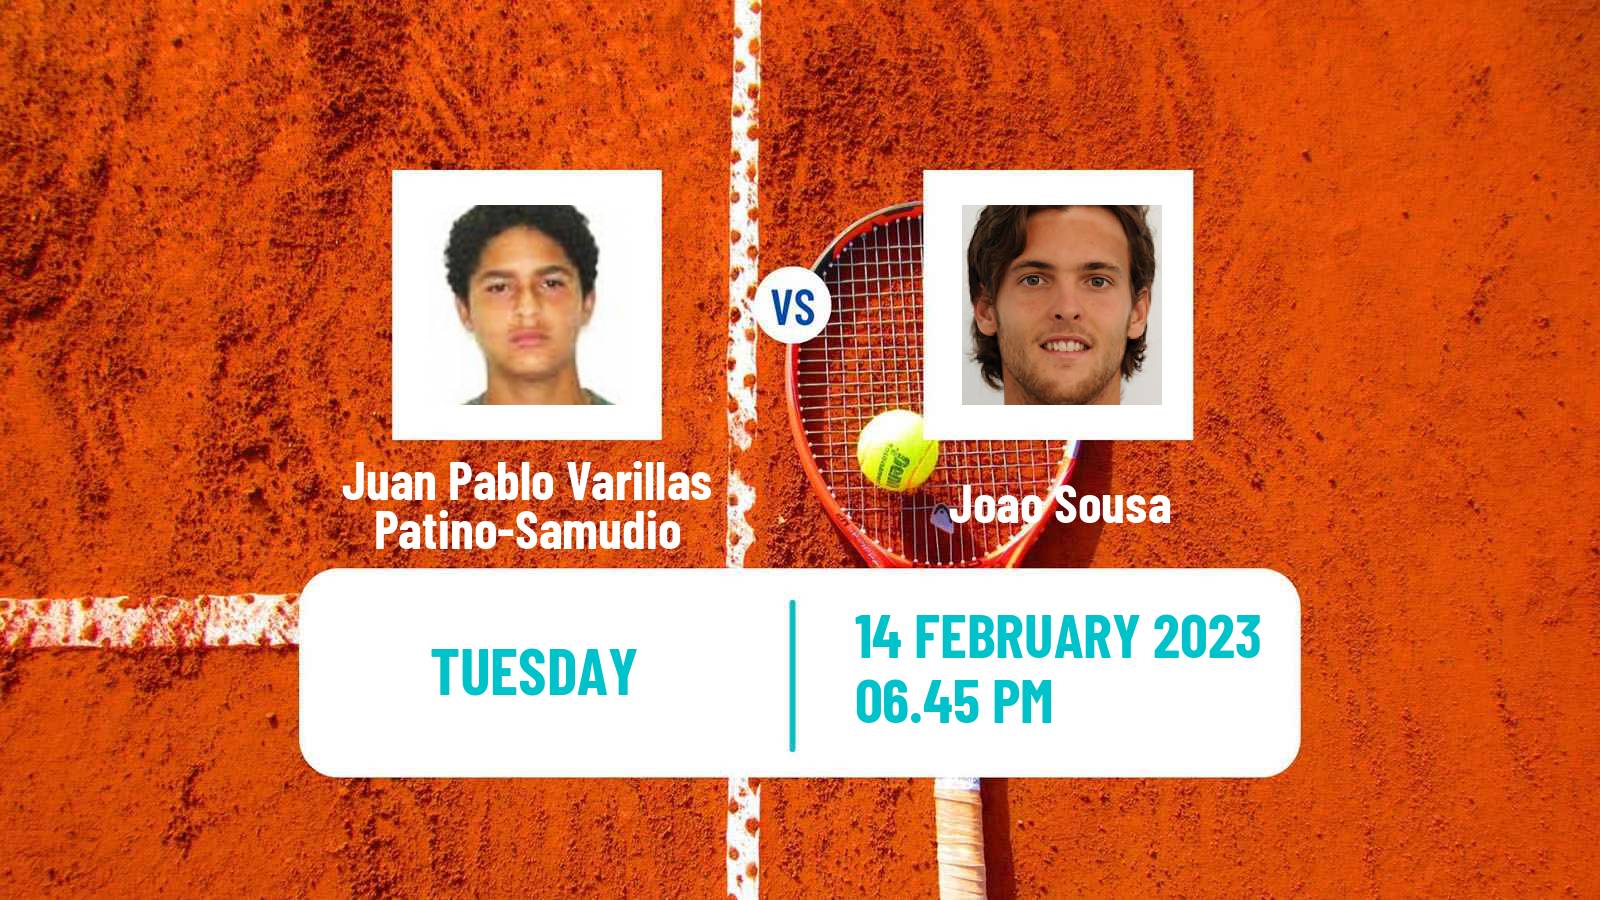 Tennis ATP Buenos Aires Juan Pablo Varillas Patino-Samudio - Joao Sousa